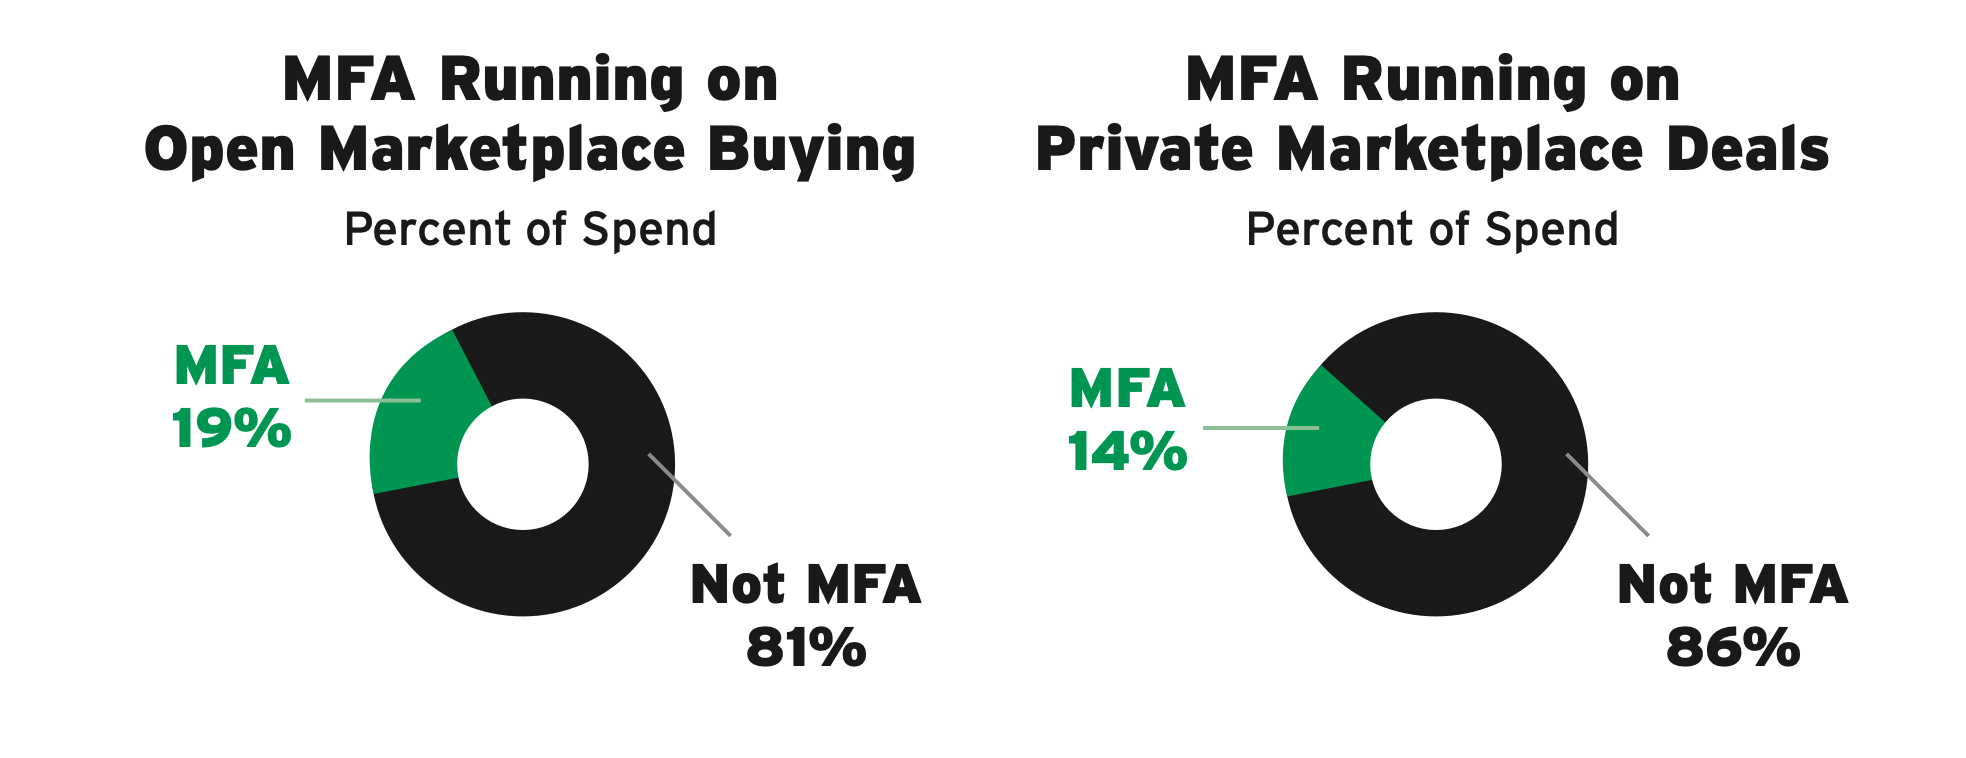 ANA: MFA running on open vs private